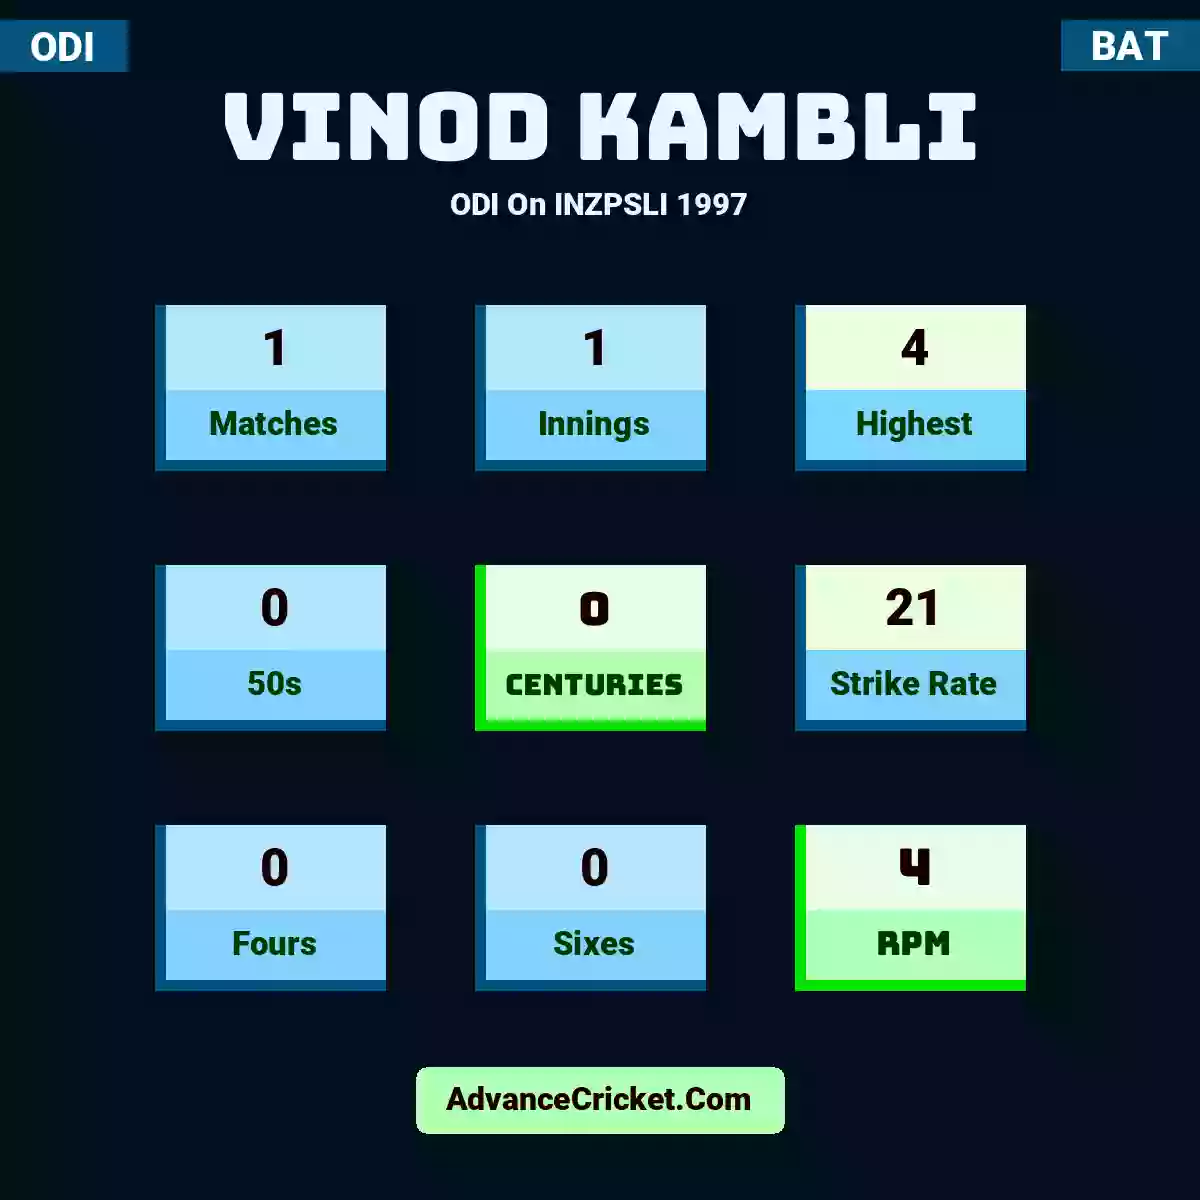 Vinod Kambli ODI  On INZPSLI 1997, Vinod Kambli played 1 matches, scored 4 runs as highest, 0 half-centuries, and 0 centuries, with a strike rate of 21. V.Kambli hit 0 fours and 0 sixes, with an RPM of 4.